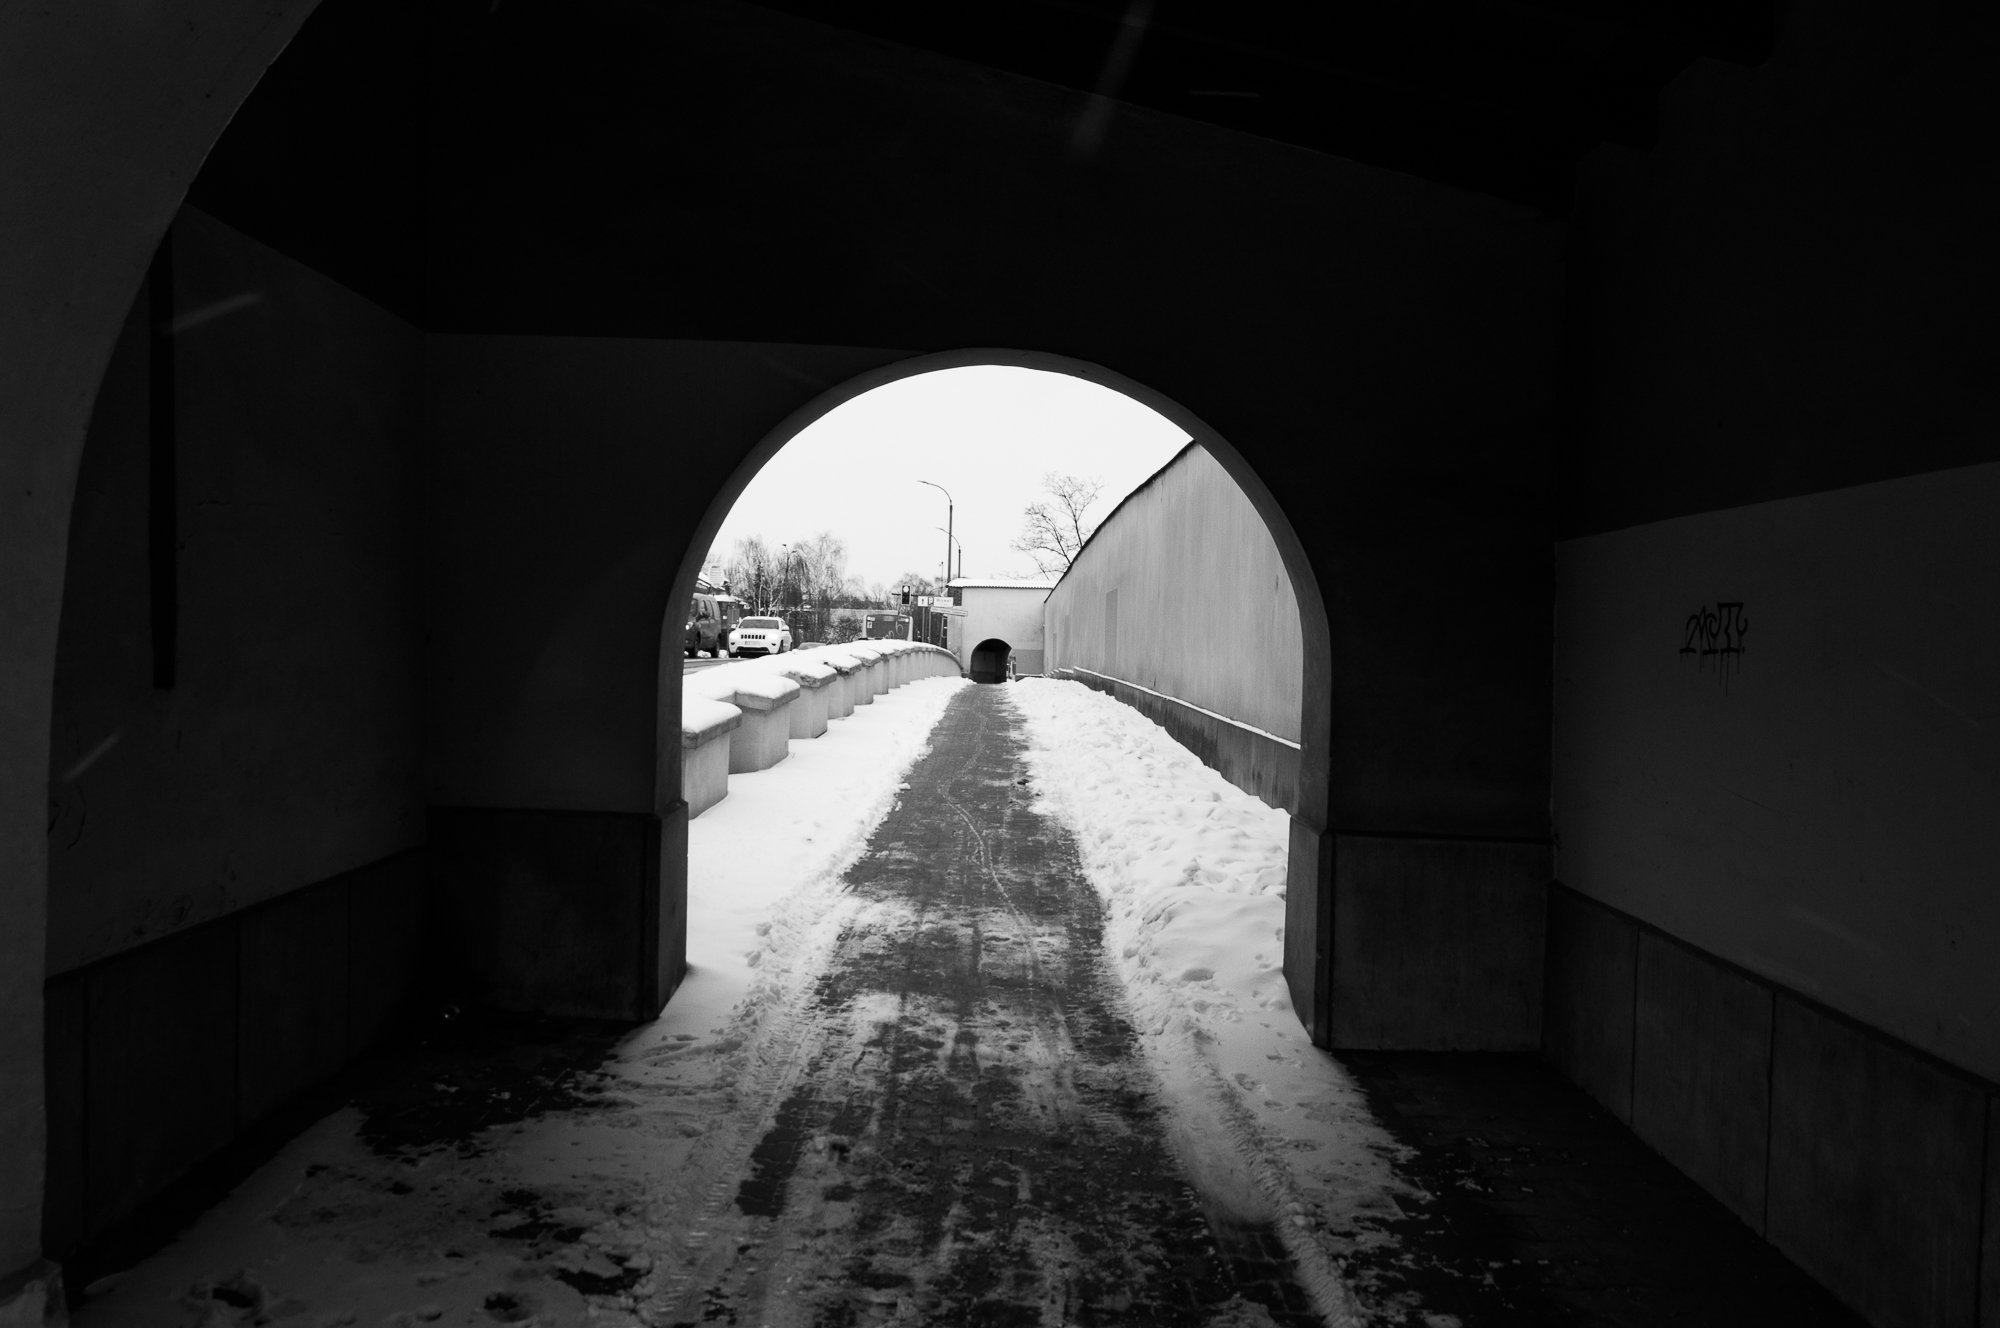 Adam Mazek Photography Krakow 2021. Post: "Illusionistic Reflection." Minimalism. Snow. Tunnel.